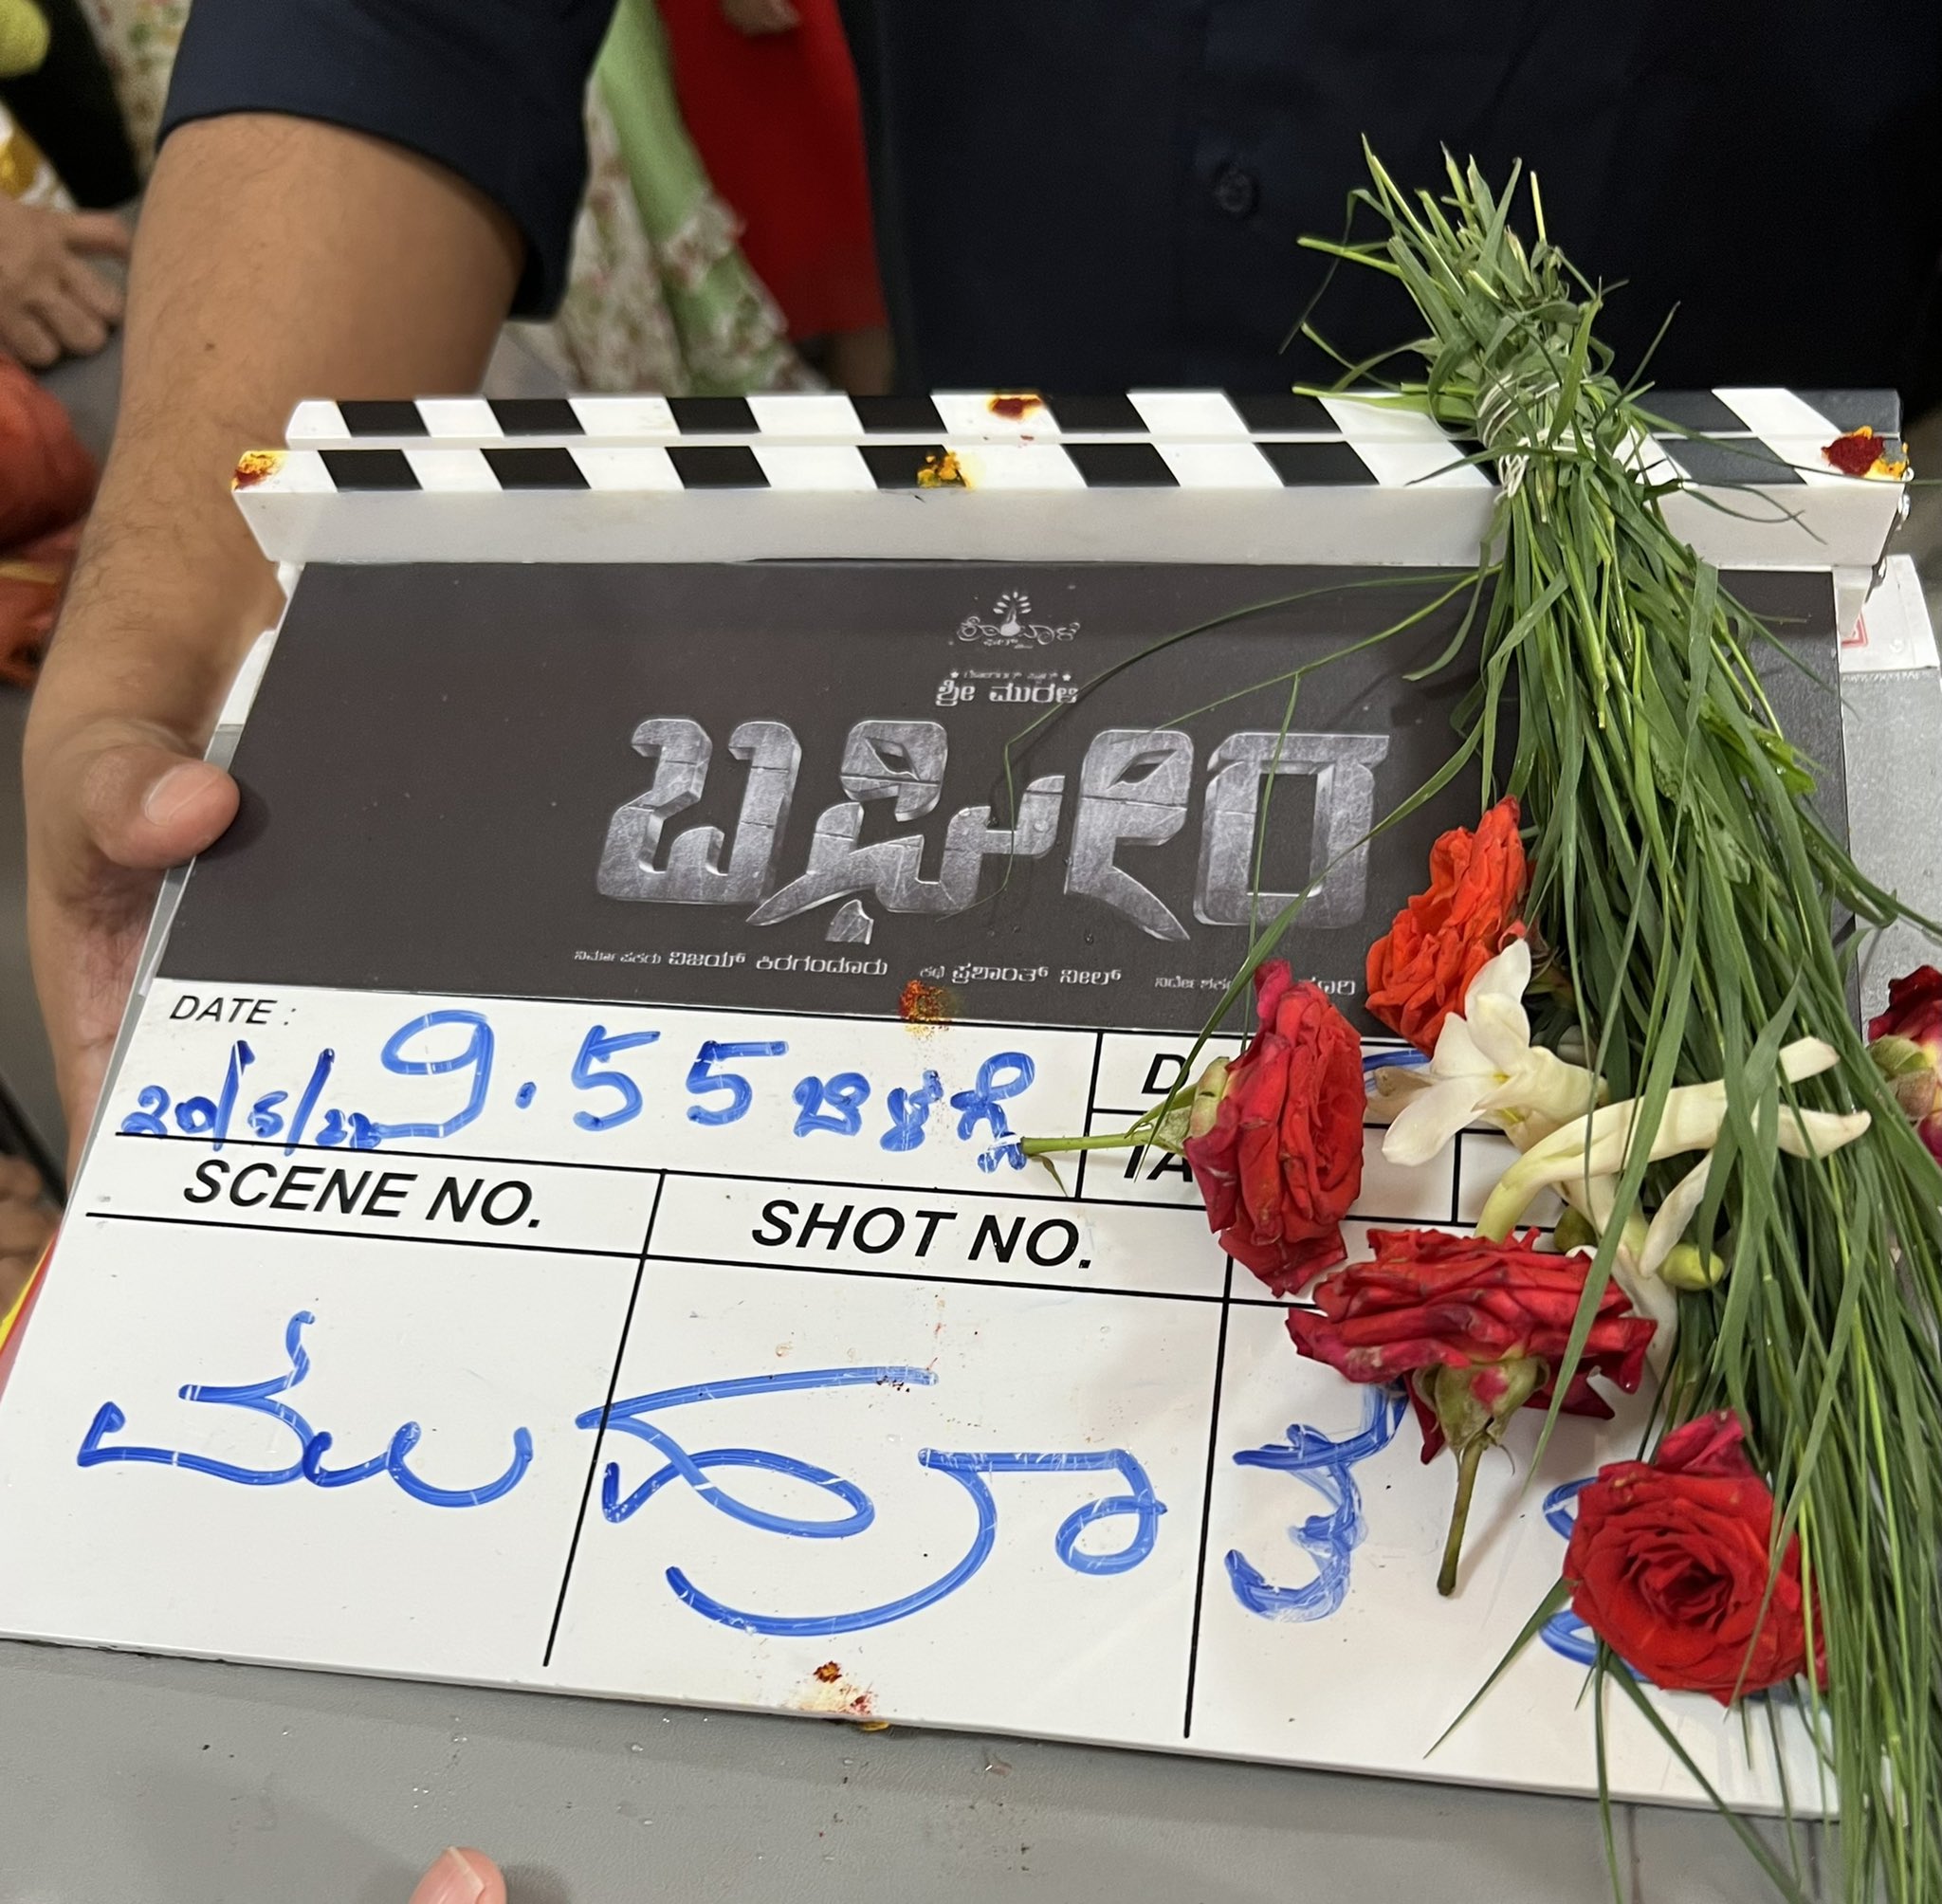 bagheera-film-started-on-srimurali-birthday